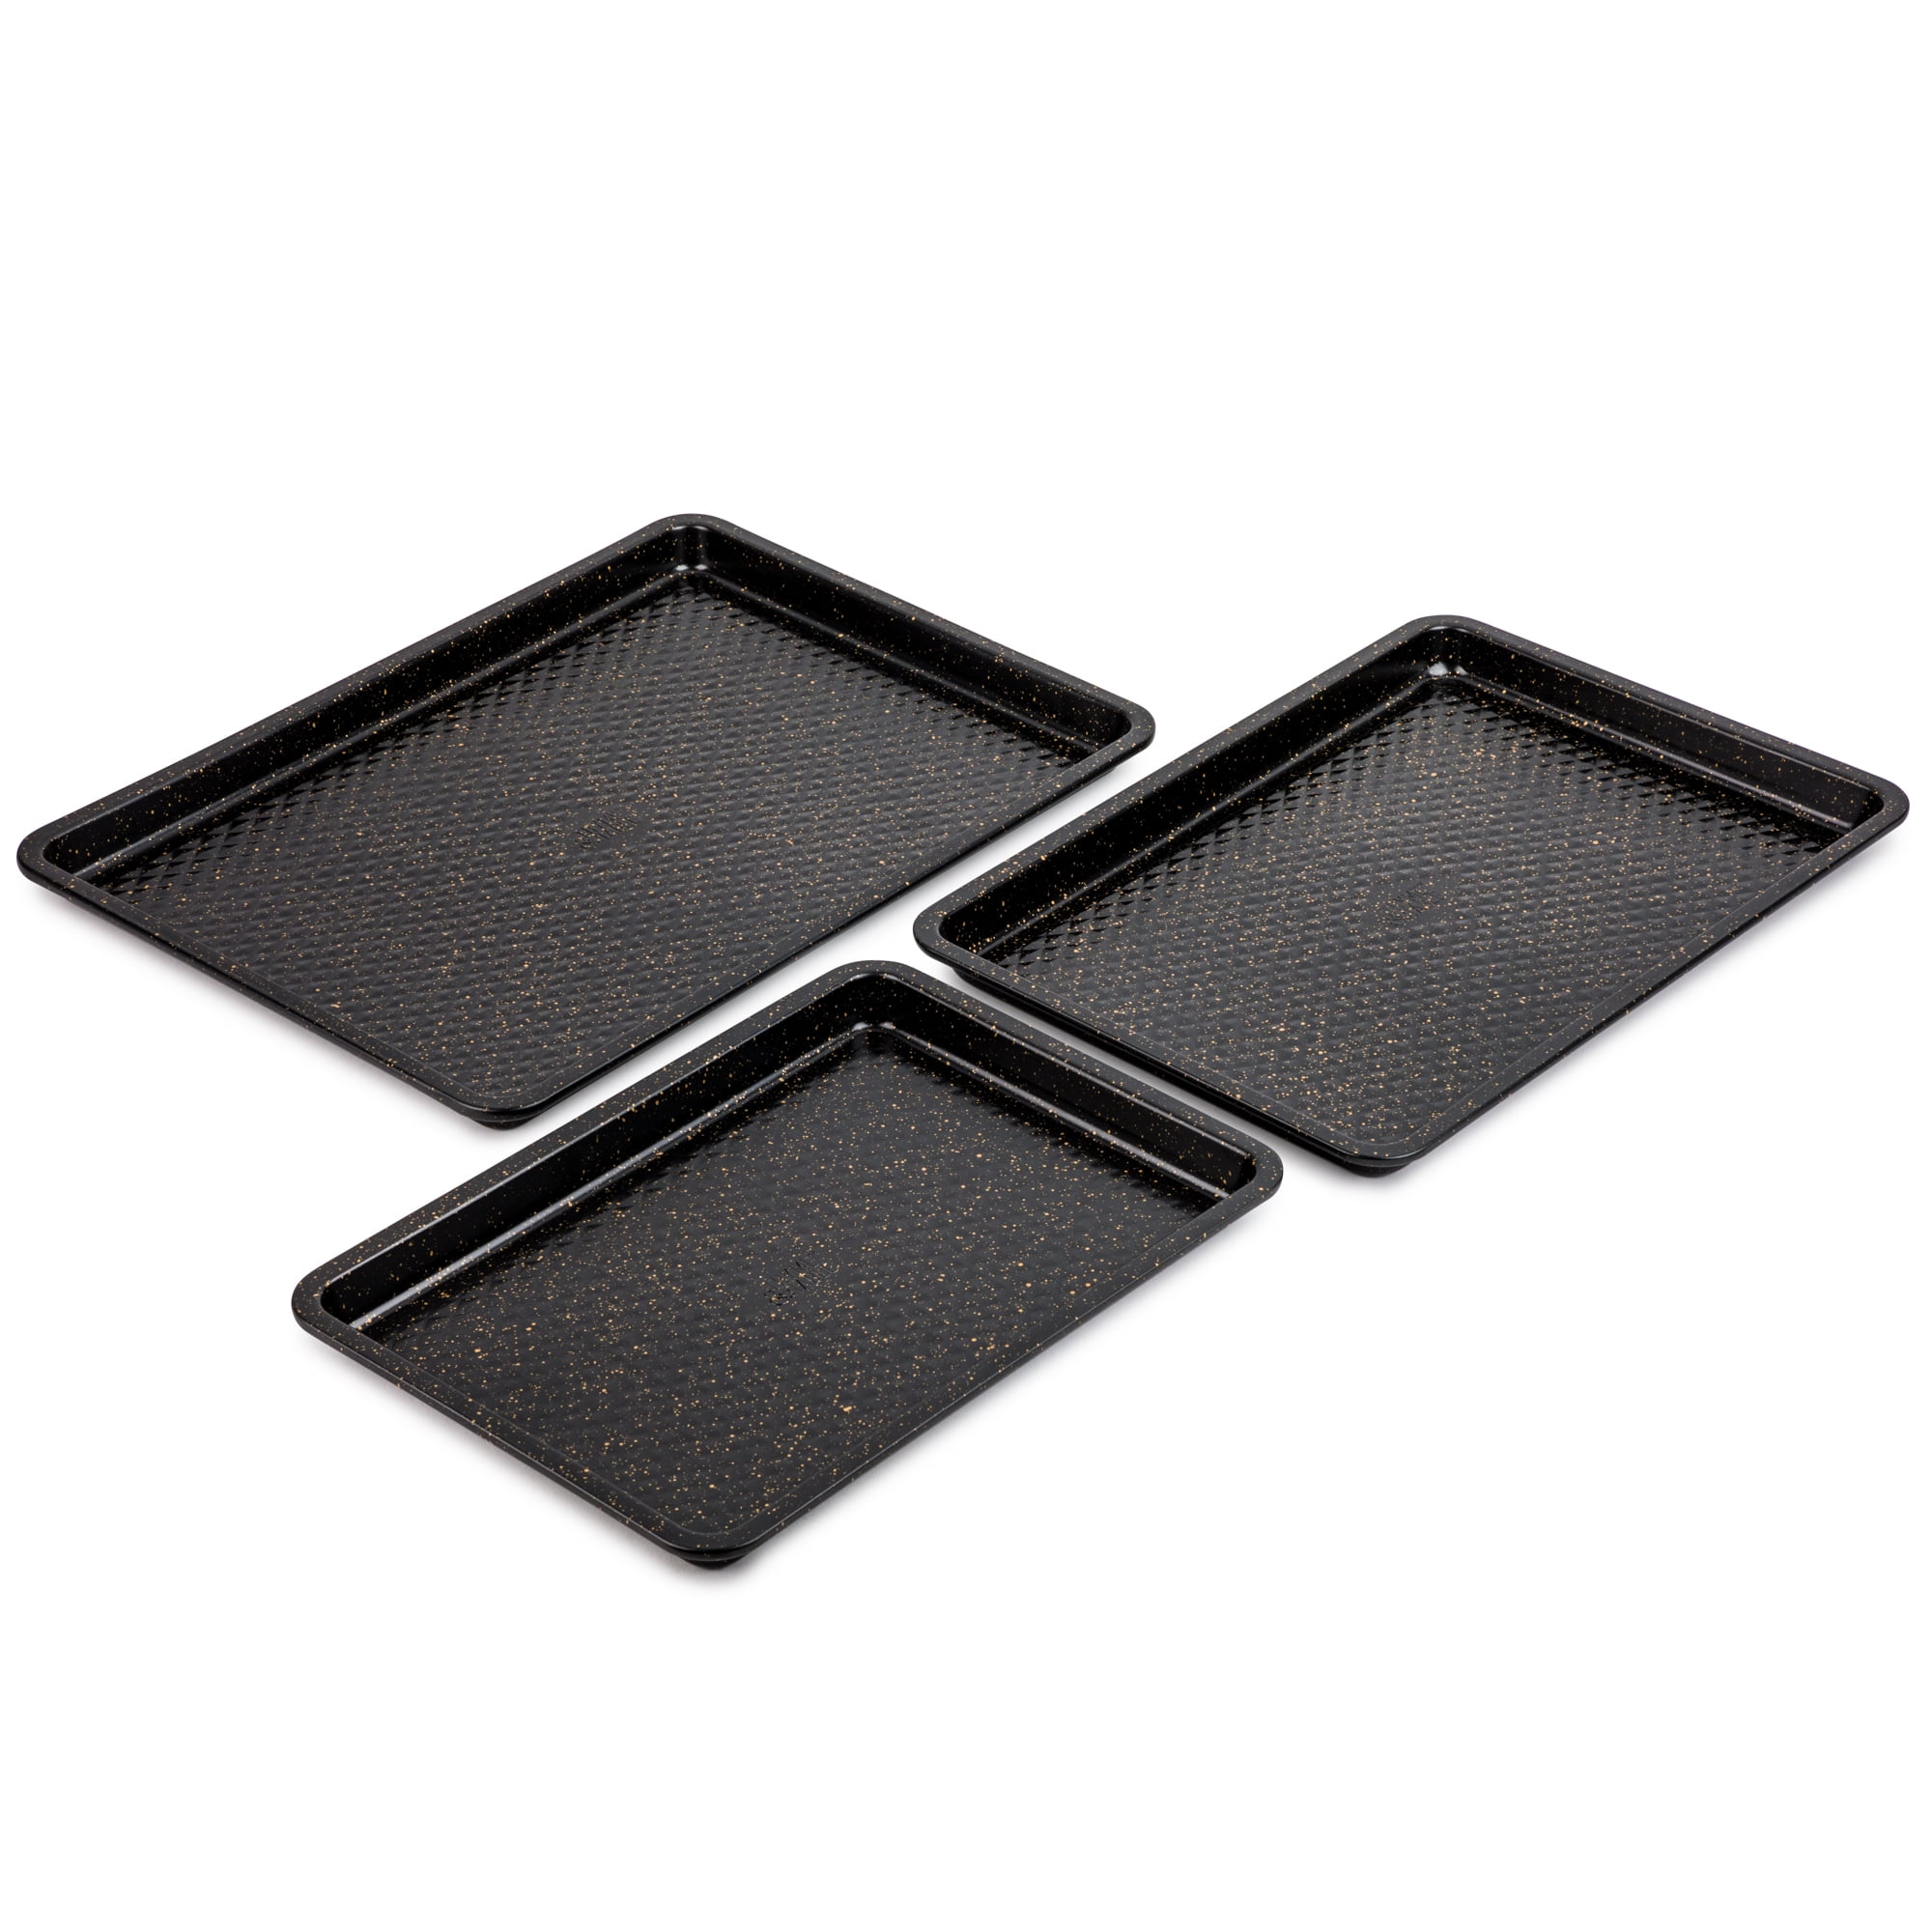 Thyme&Table Nonstick Sheet Pan - Black - 3 Pieces